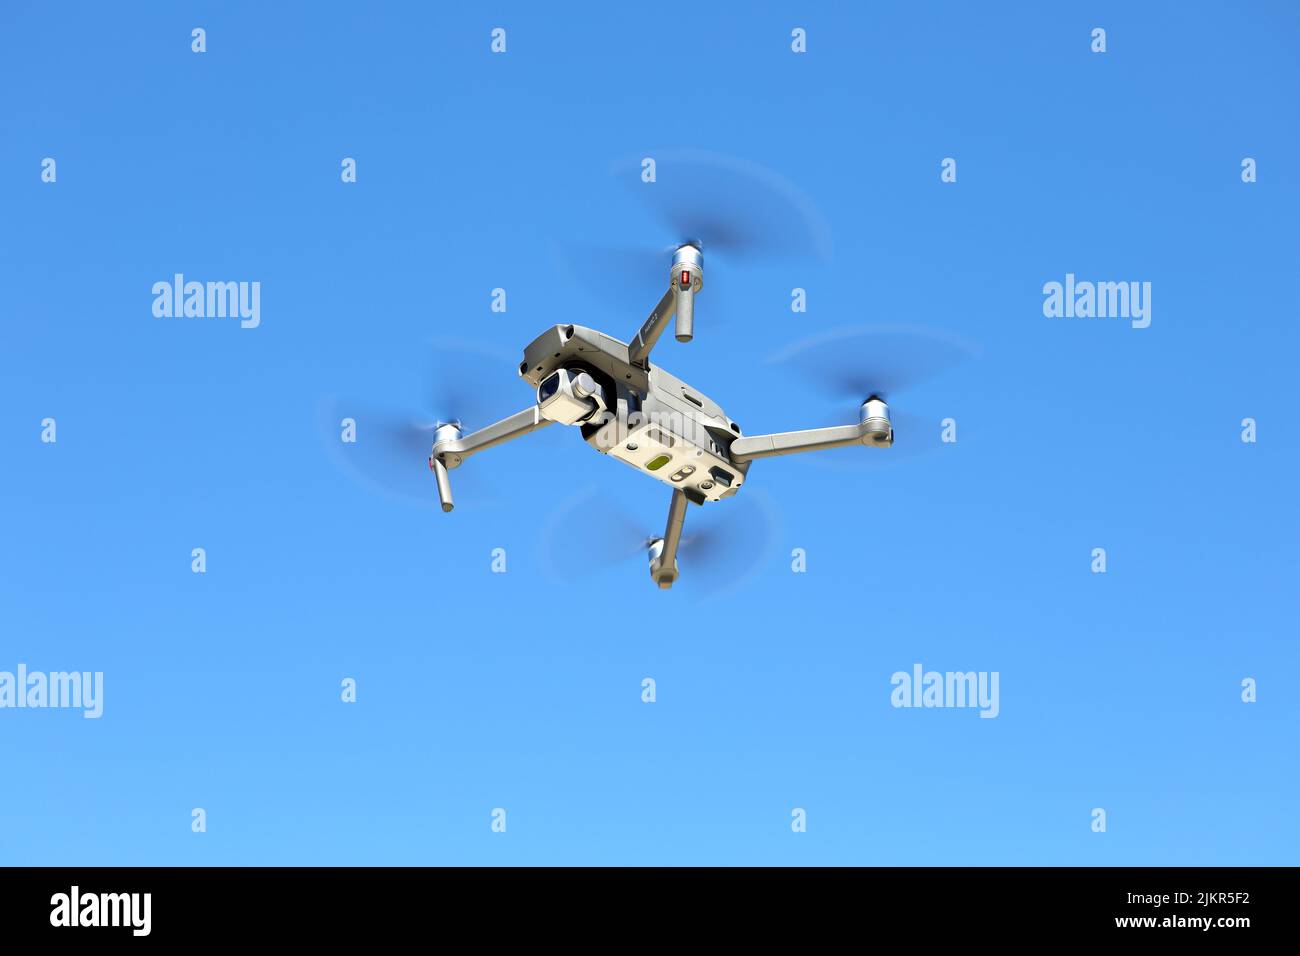 DJI Mavic drone in the air against a blue sky Stock Photo